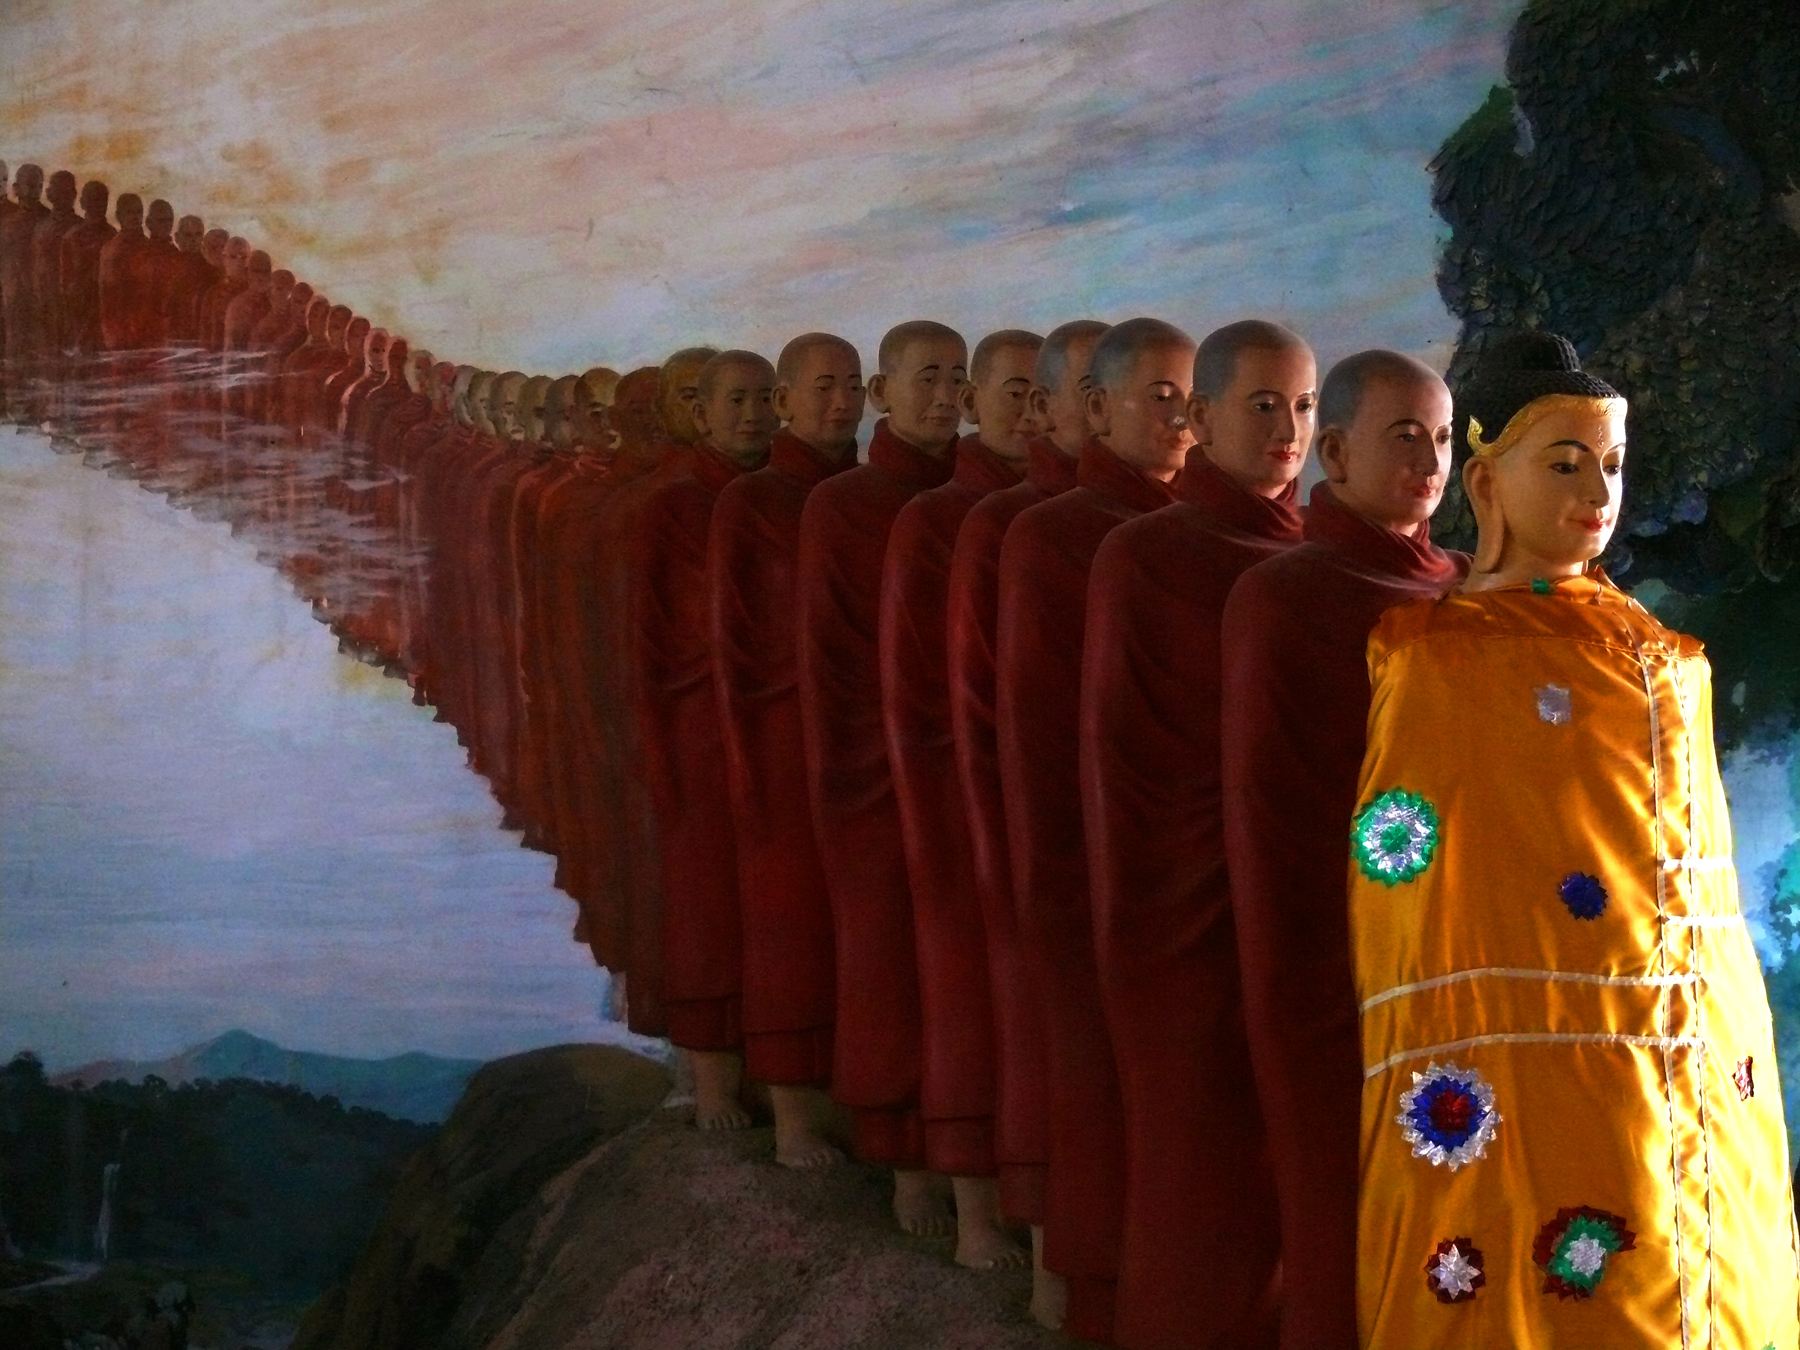 Row of Monks Burma